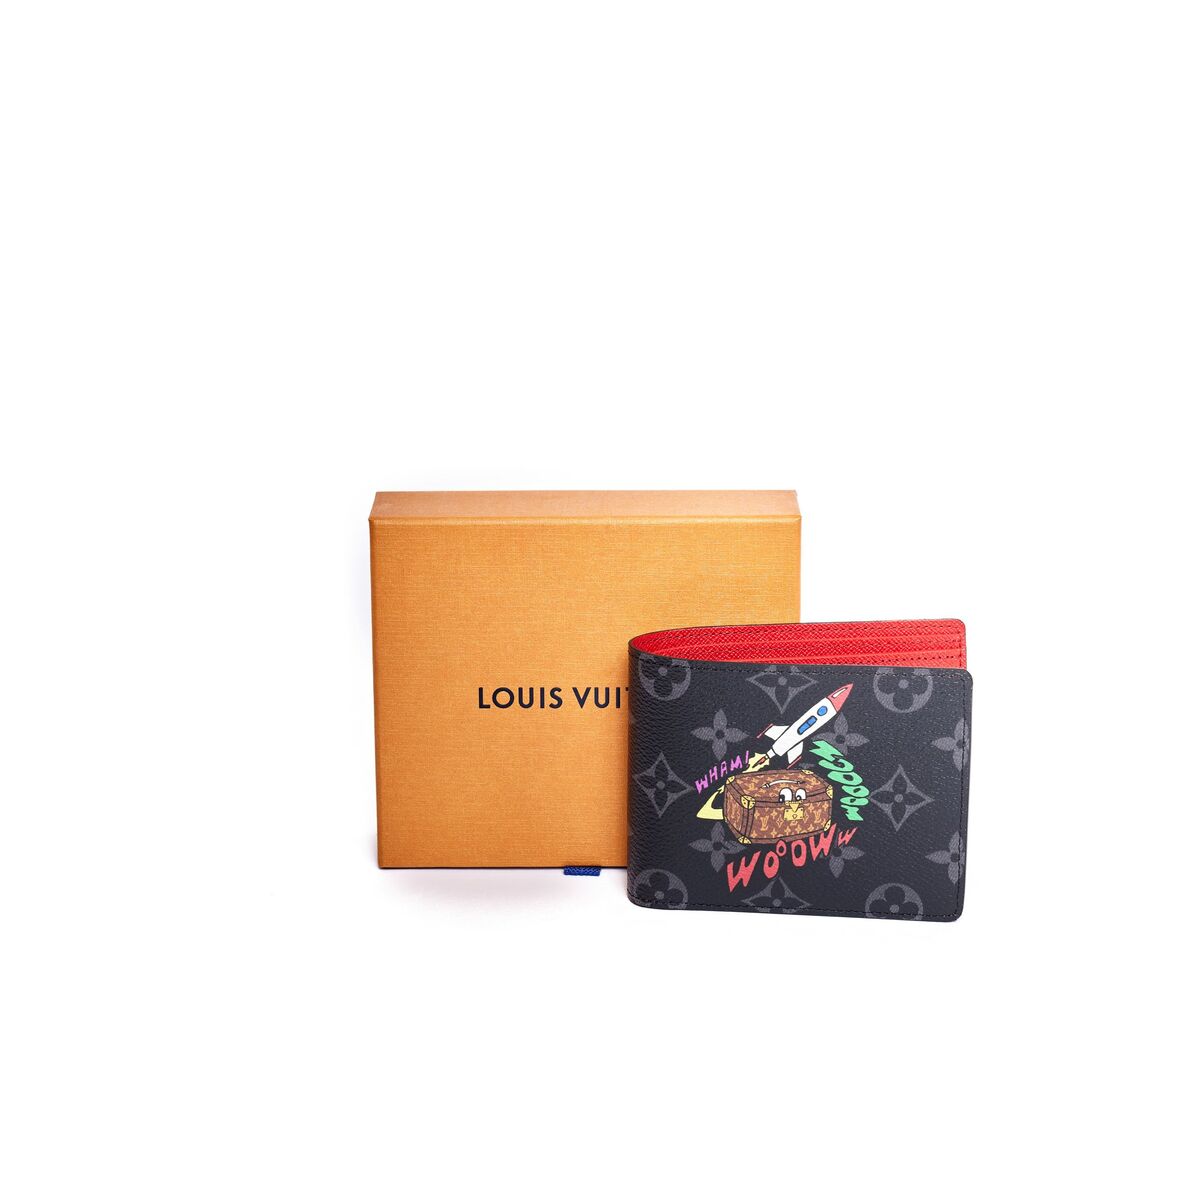 louis vuitton mens wallet limited edition